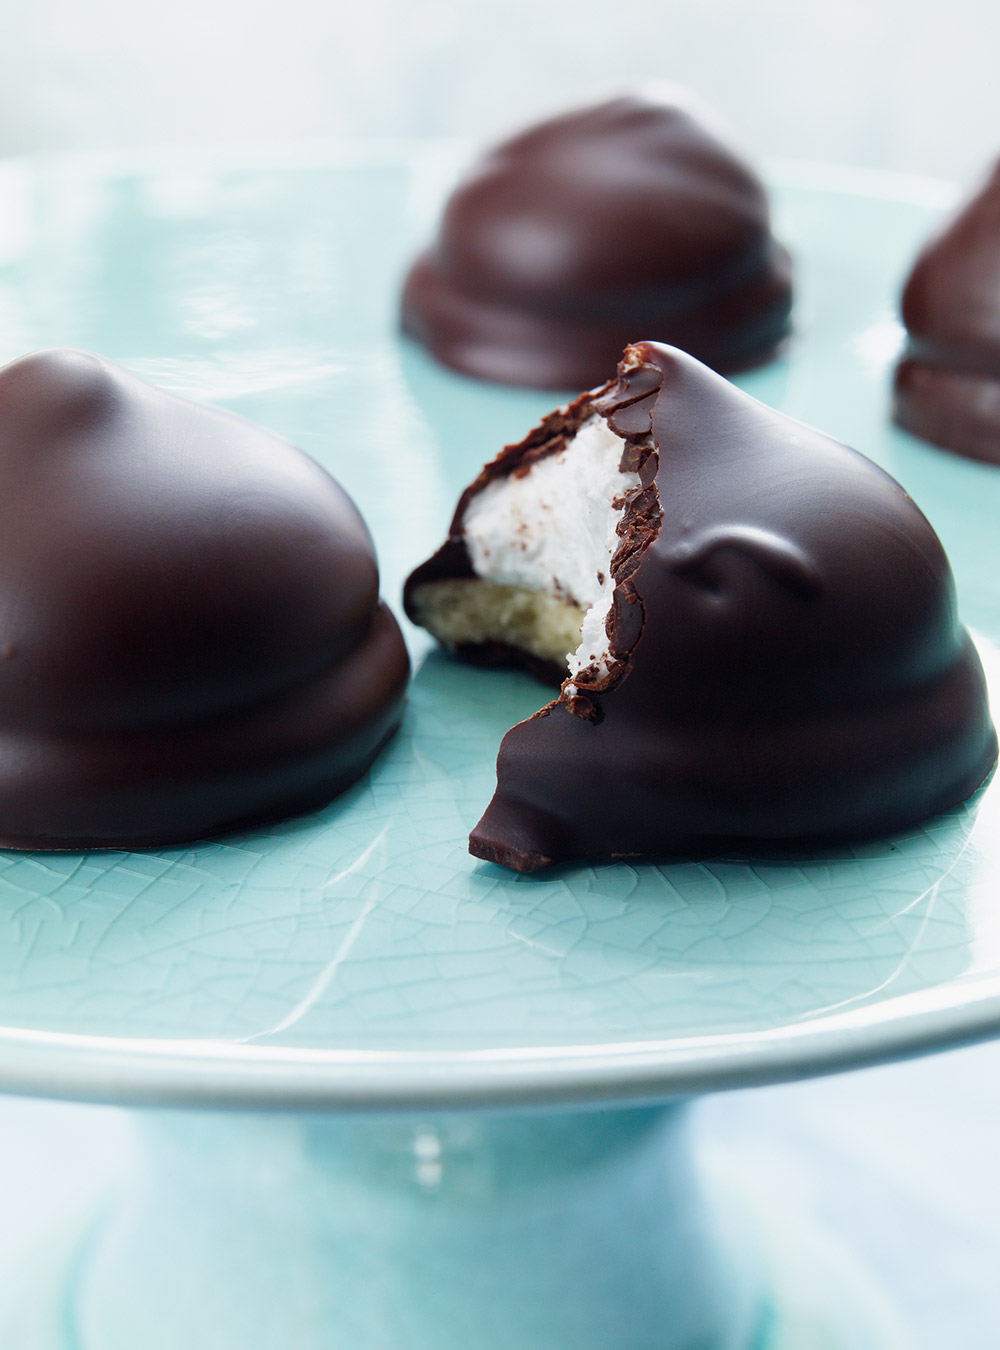 Homemade Chocolate-Coated Marshmallow Cookies